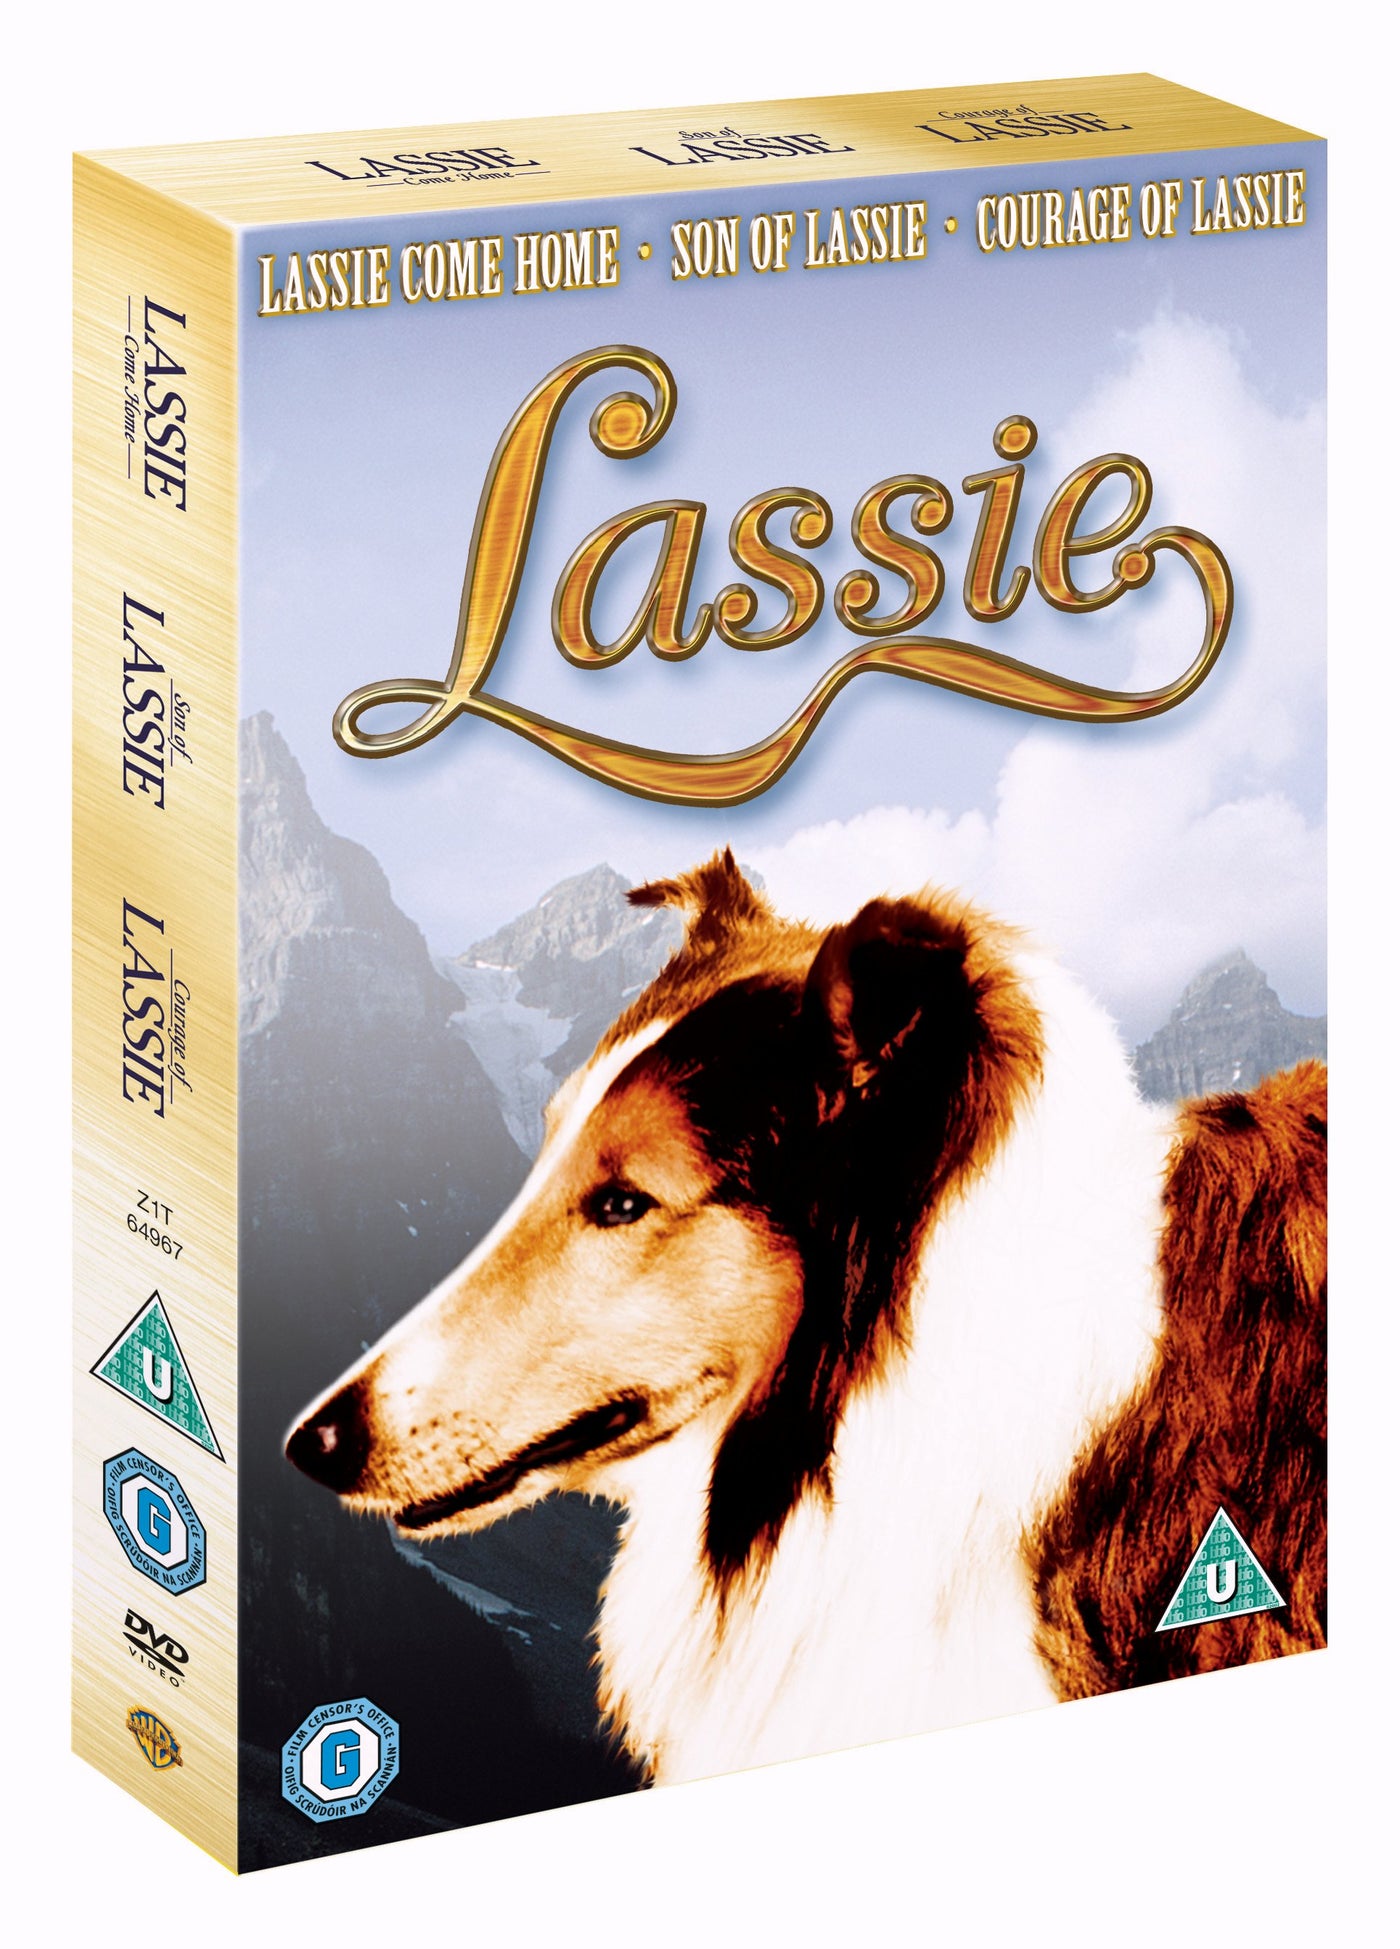 Lassie Come Home Son Of Lassie Courage Of Lassie 3 Disc Box Set Warner Bros Shop Uk 